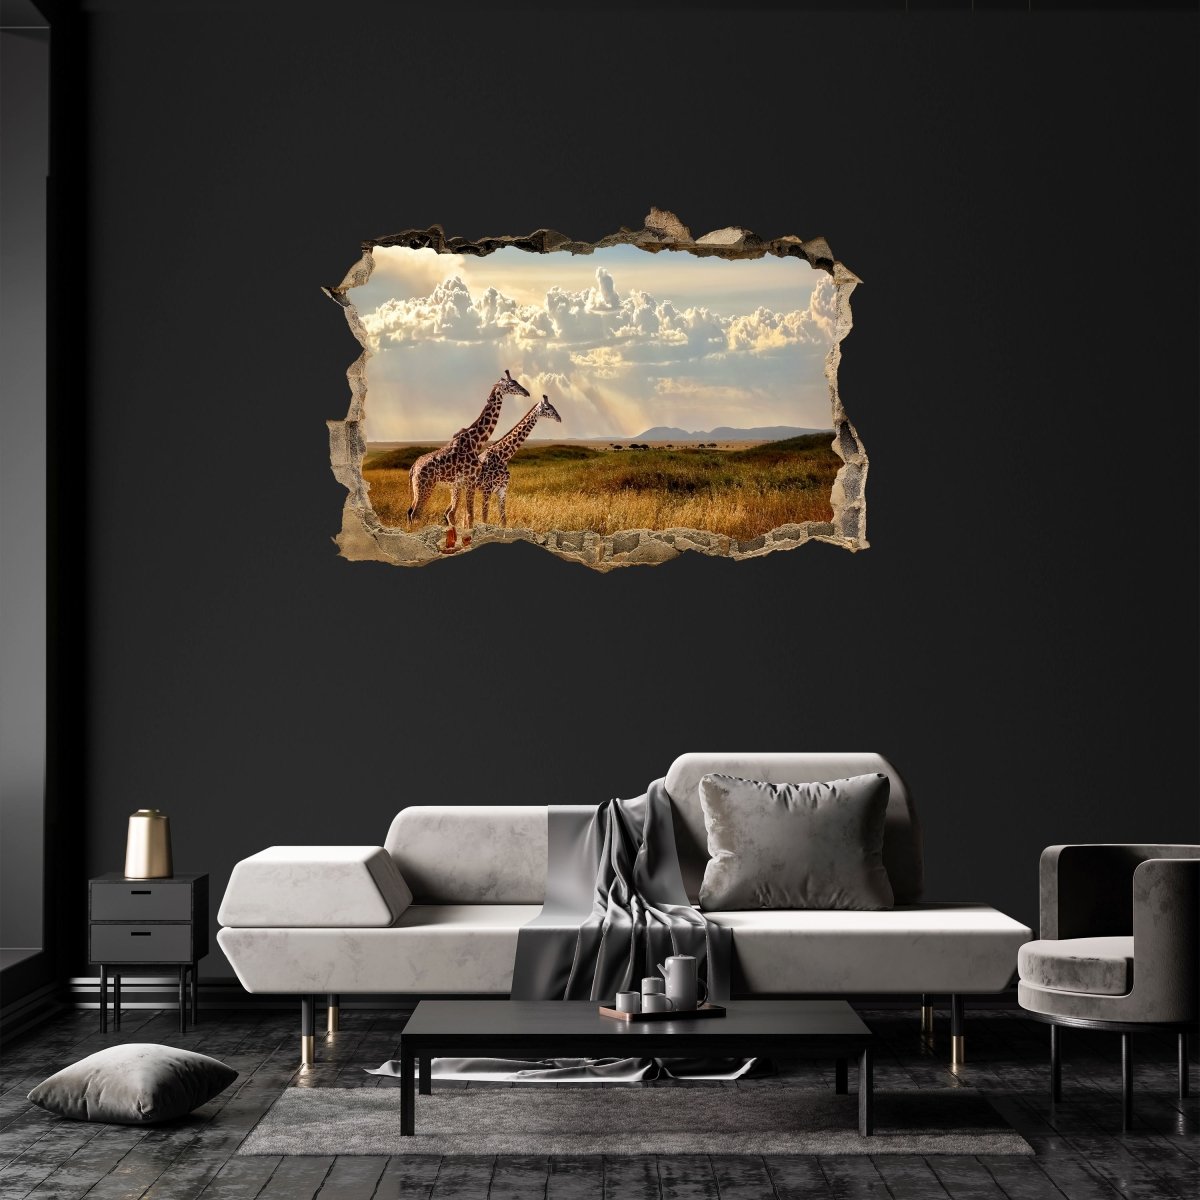 Sticker mural 3D girafes dans la steppe, Afrique, soleil - Sticker mural M1098